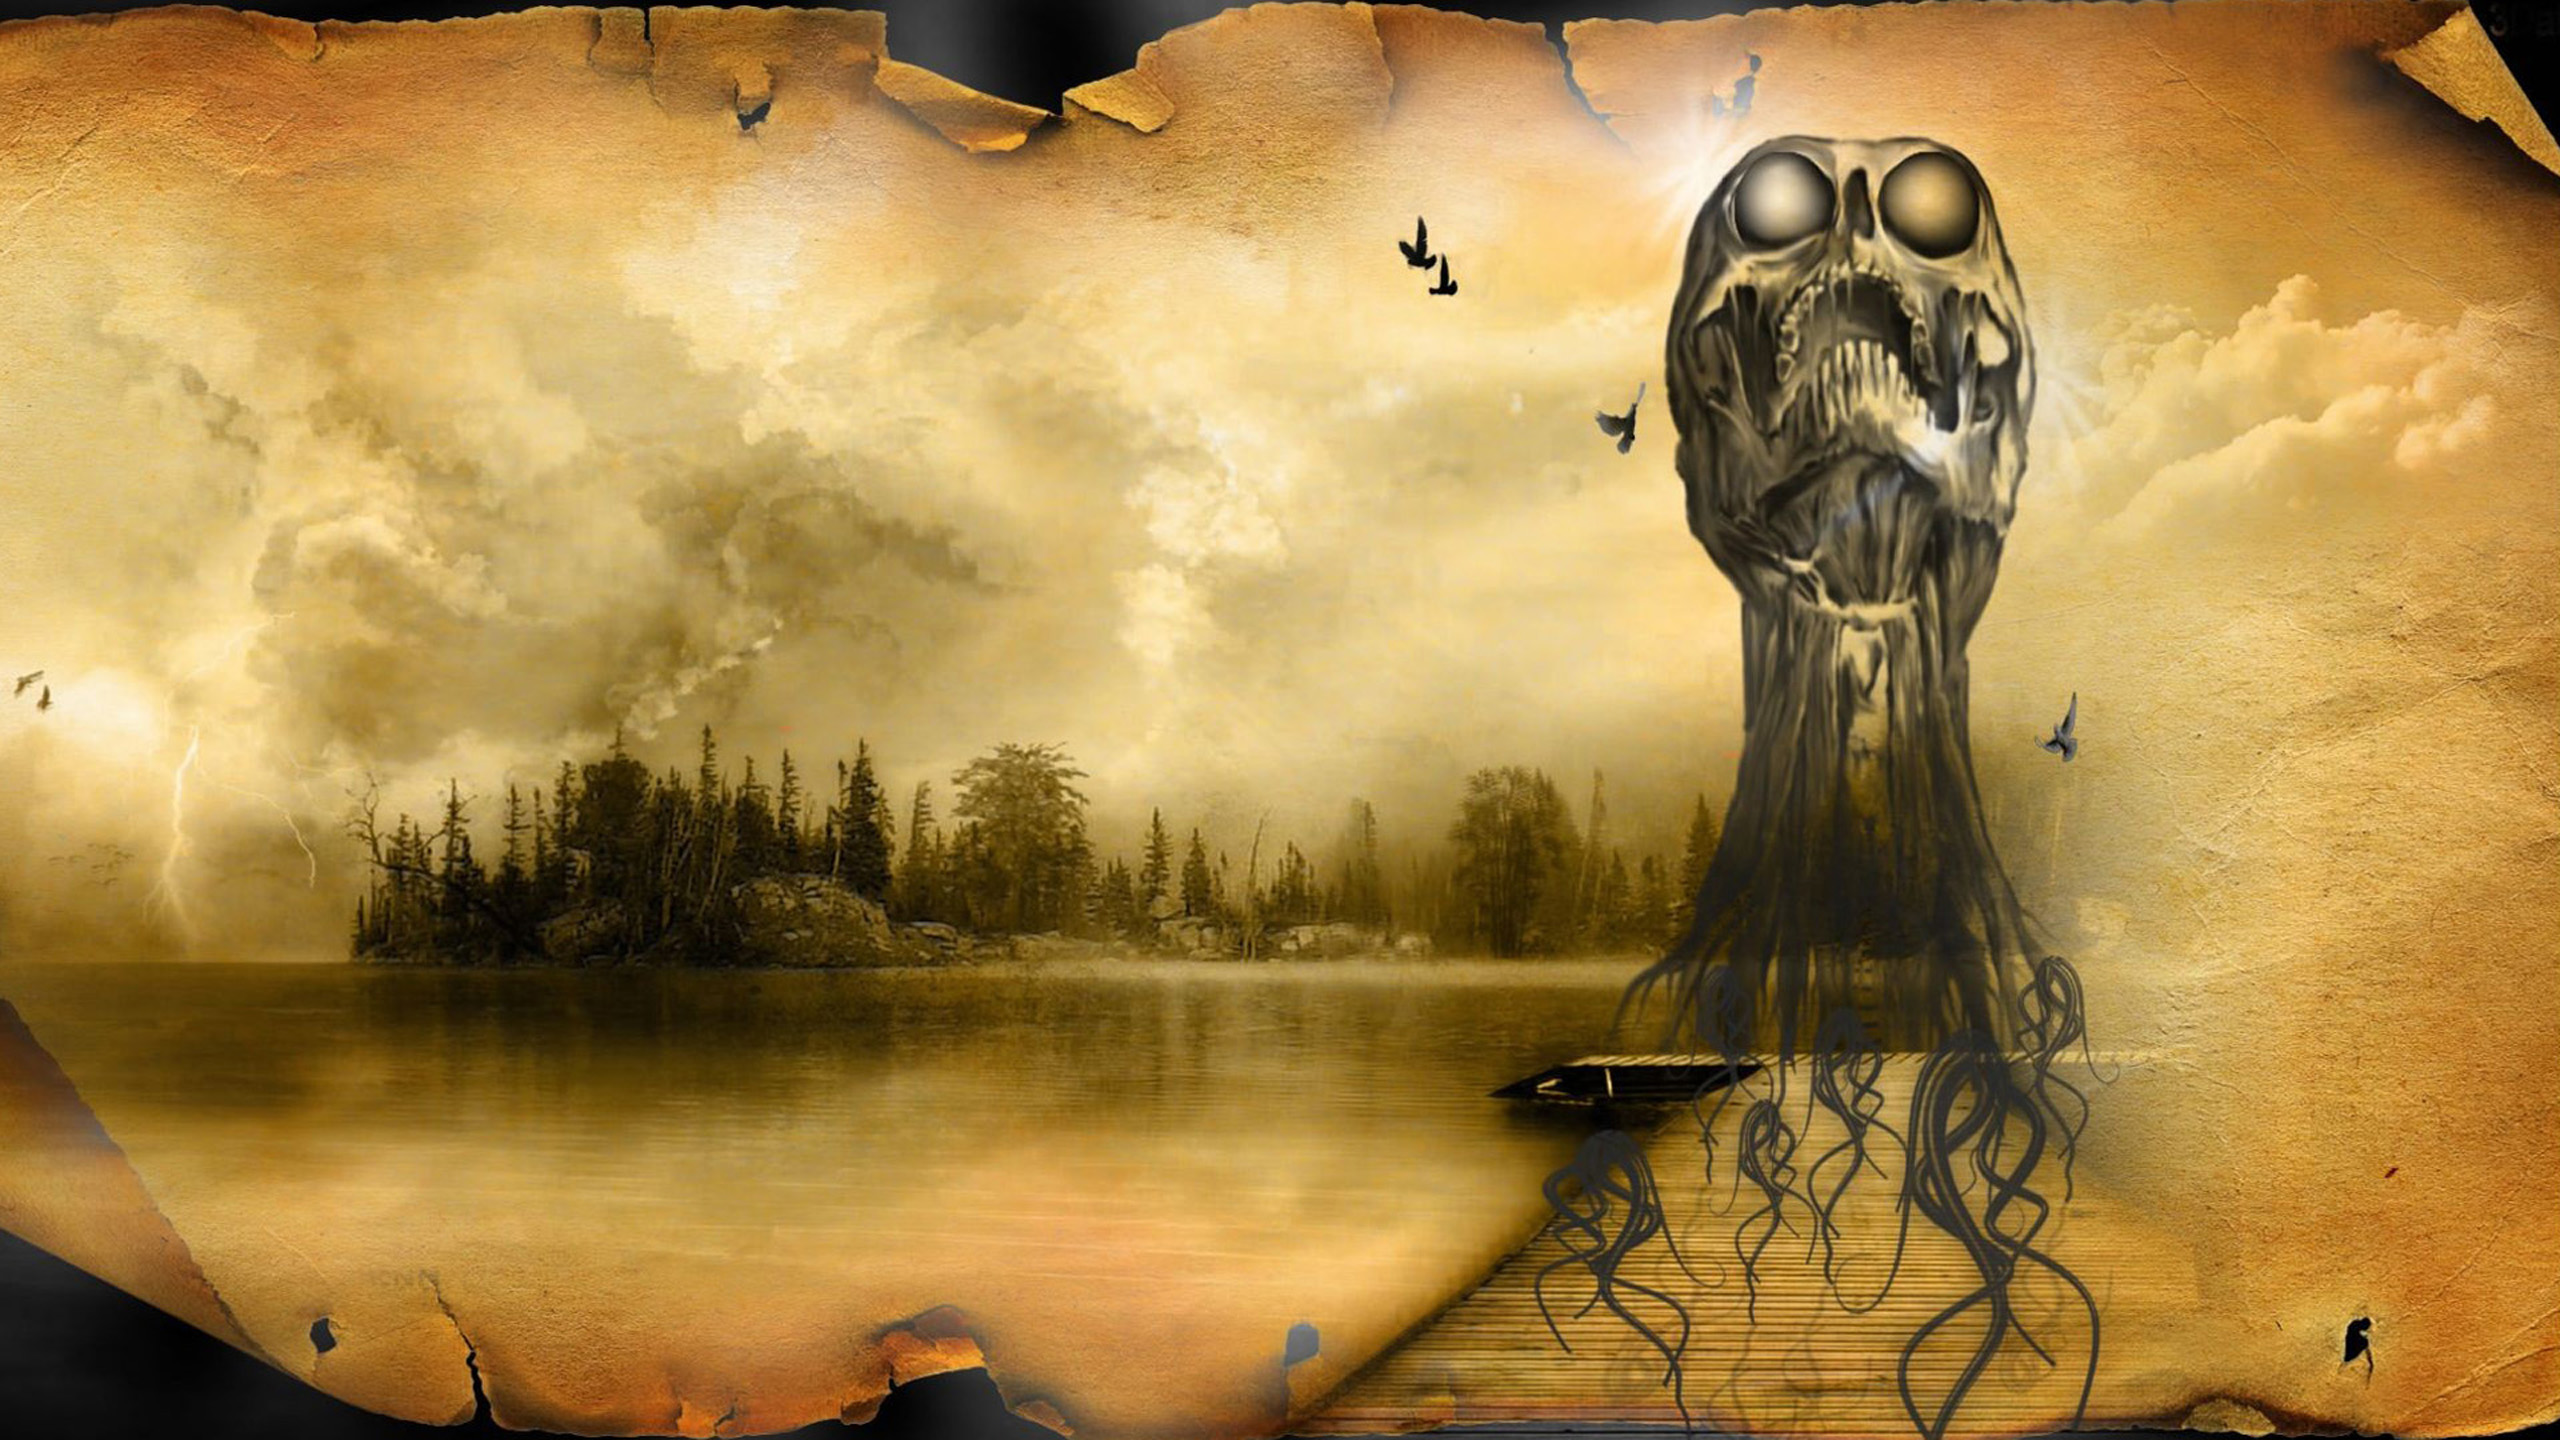 Danger Skull Nun Wallpaper, Hd Desktop Wallpapers - Fantasy Lake Wallpaper  4k - 2560x1440 Wallpaper 